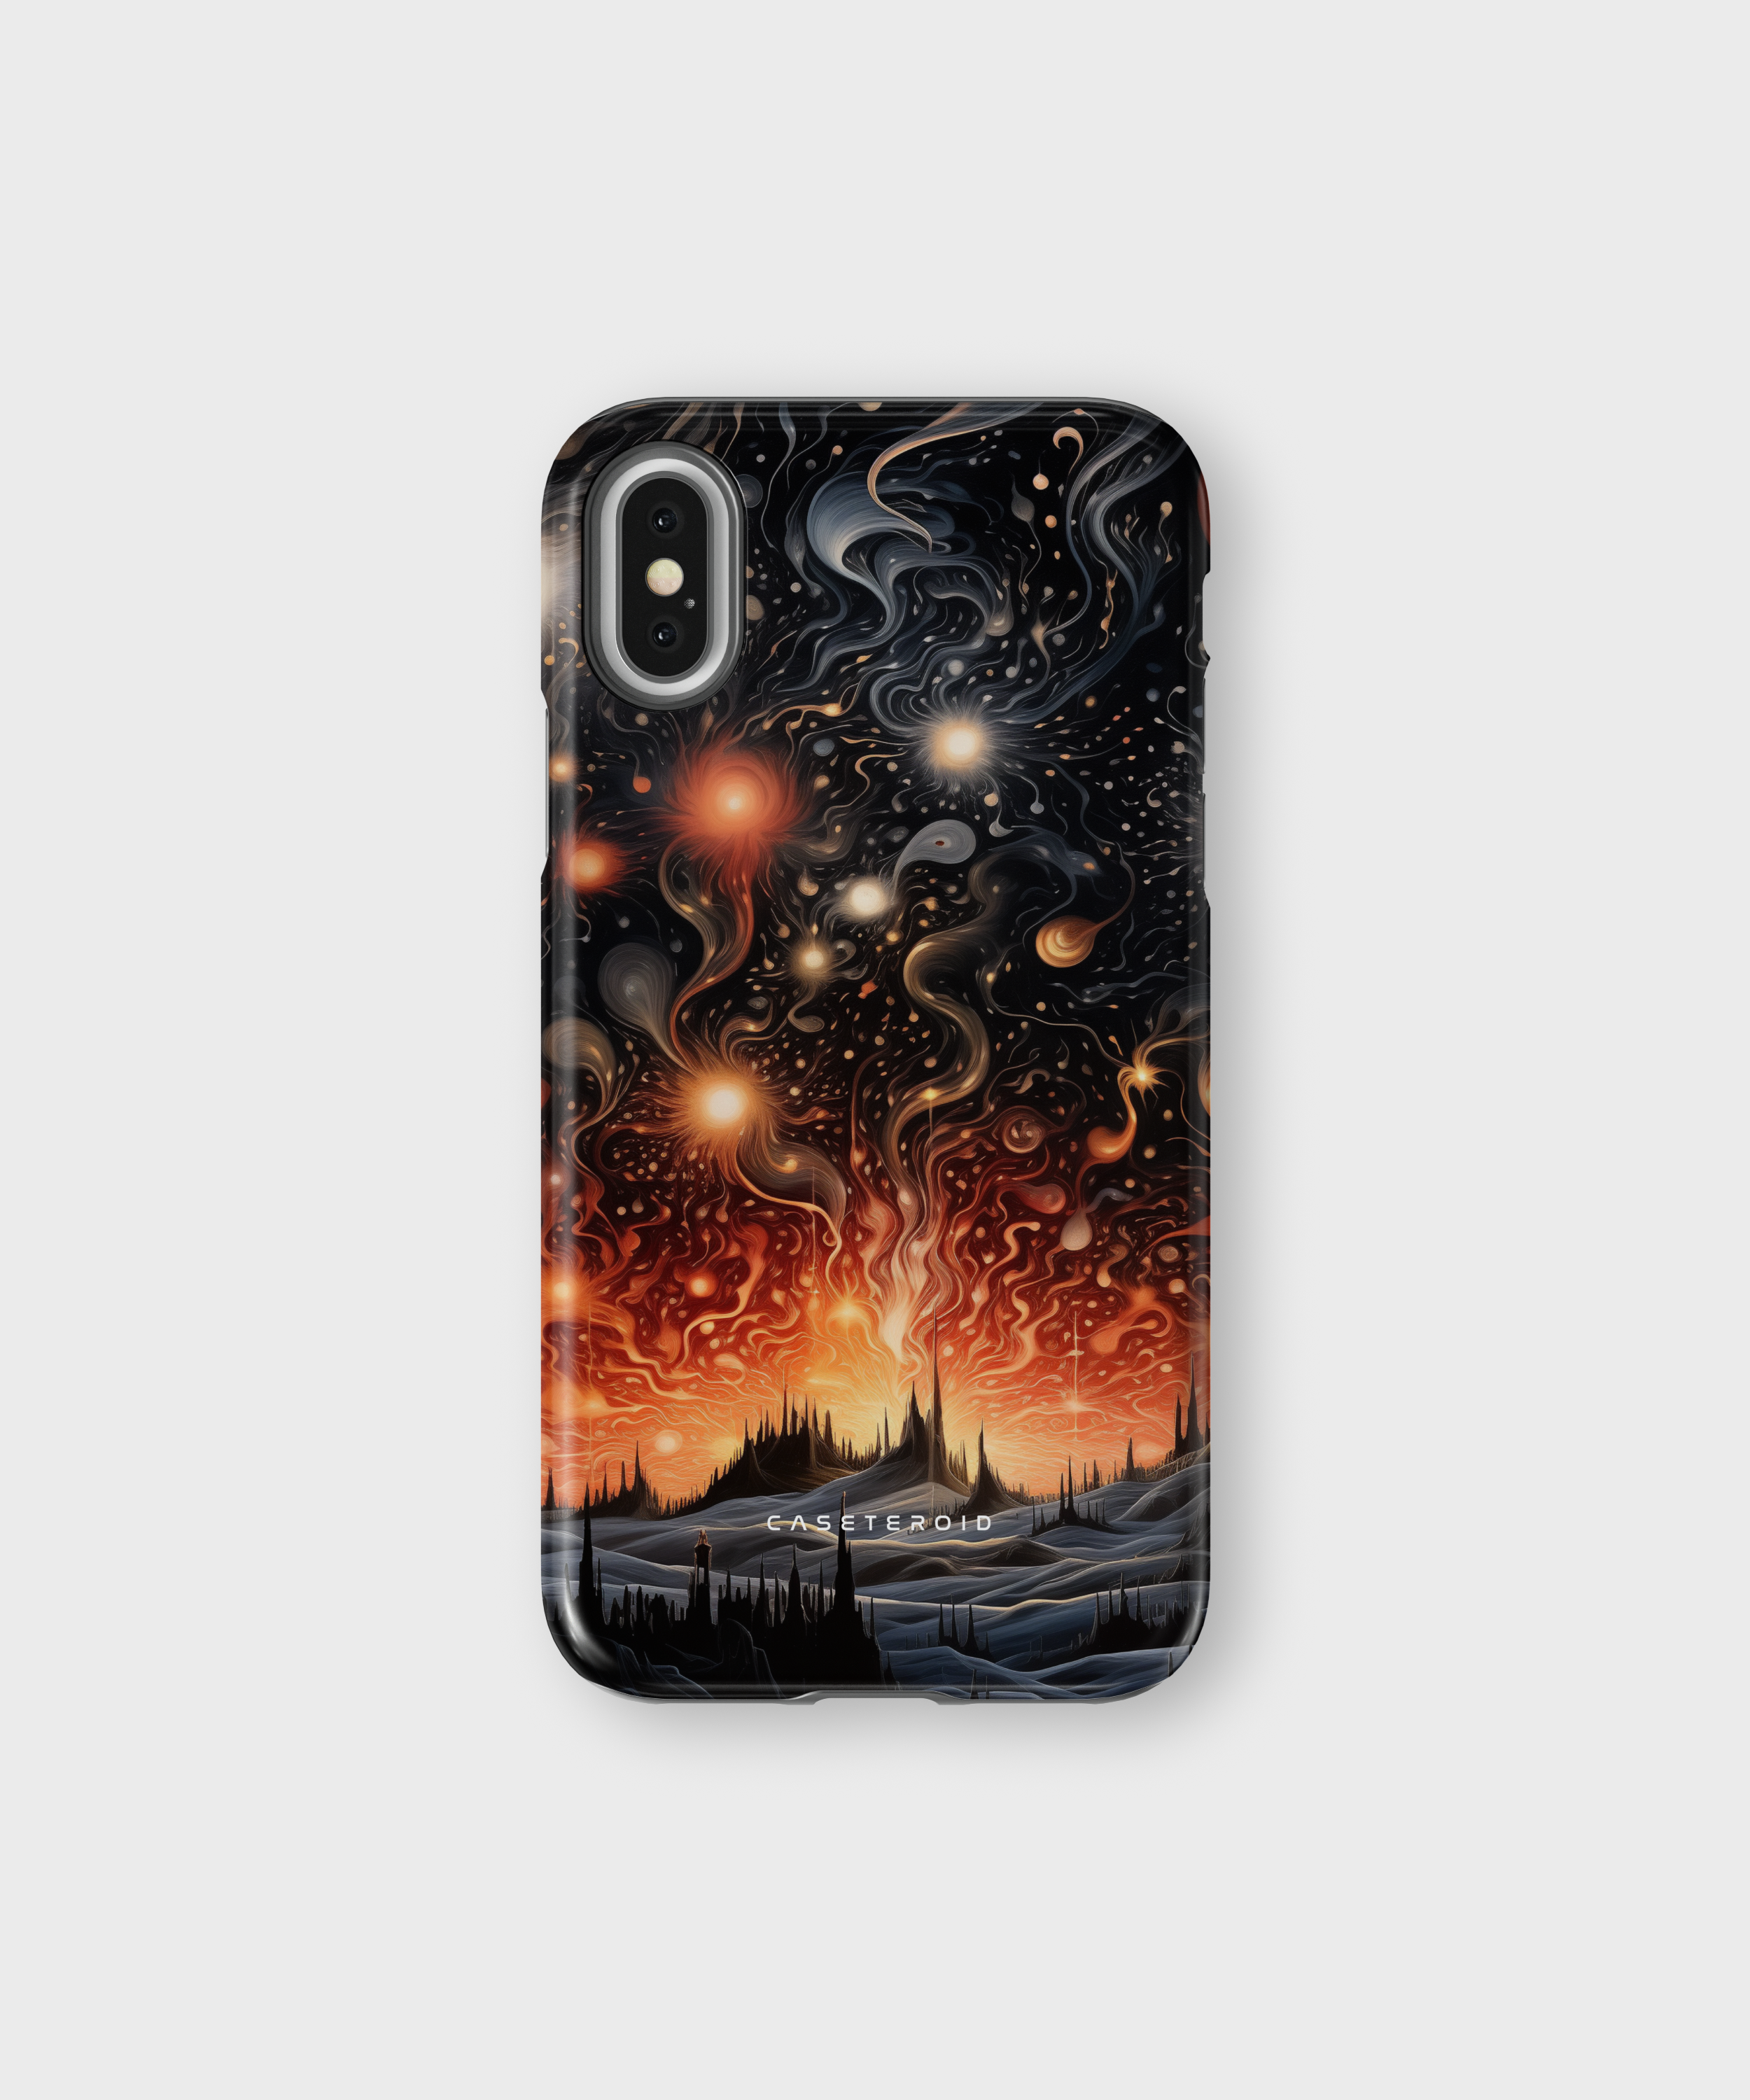 iPhone Tough Case - Stellar Fantasia - CASETEROID